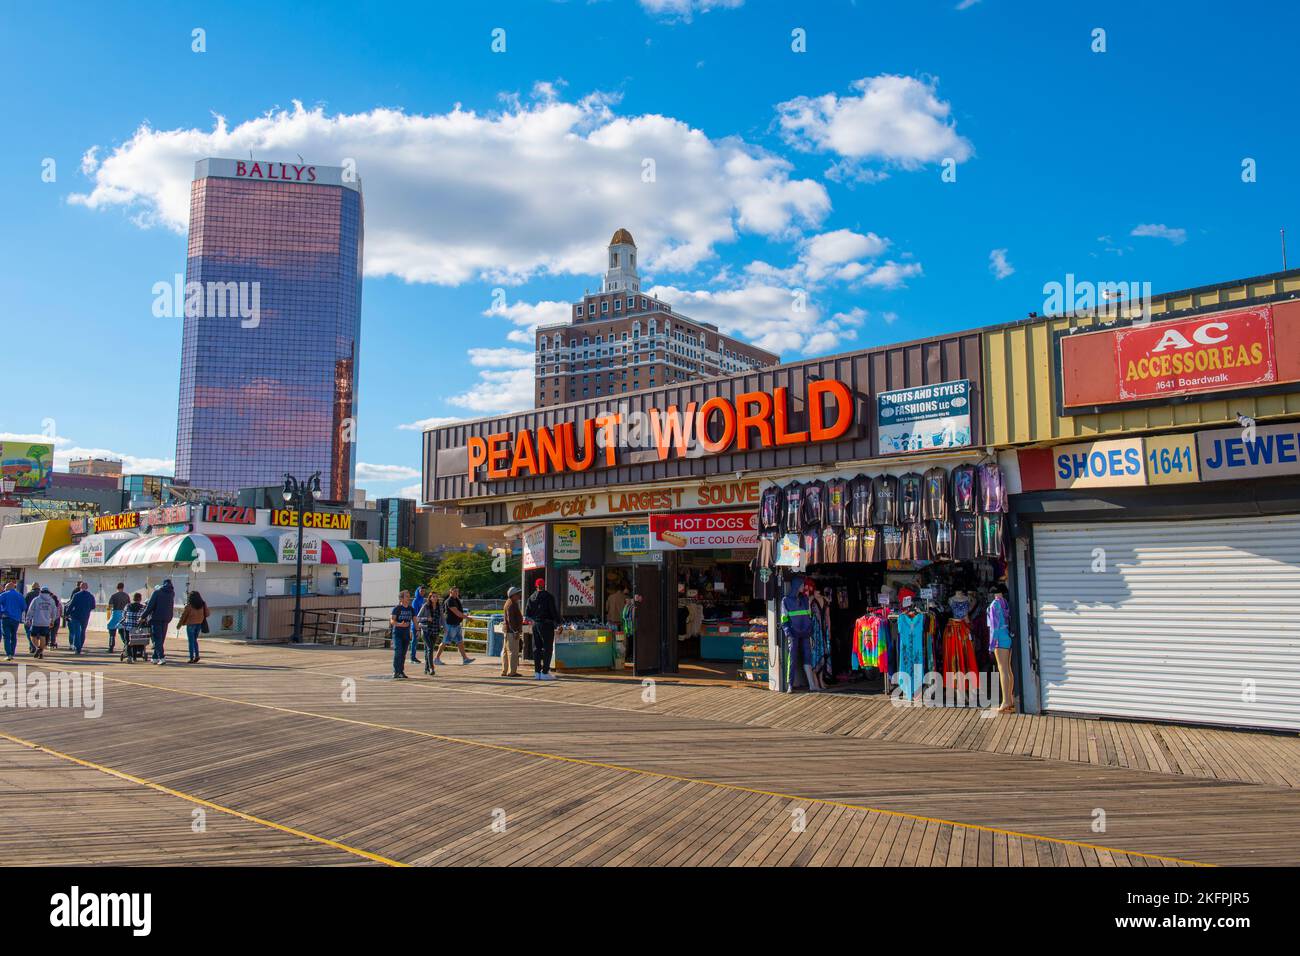 Peanut World souvenir store at Boardwalk in Atlantic City, New Jersey NJ, USA. Stock Photo